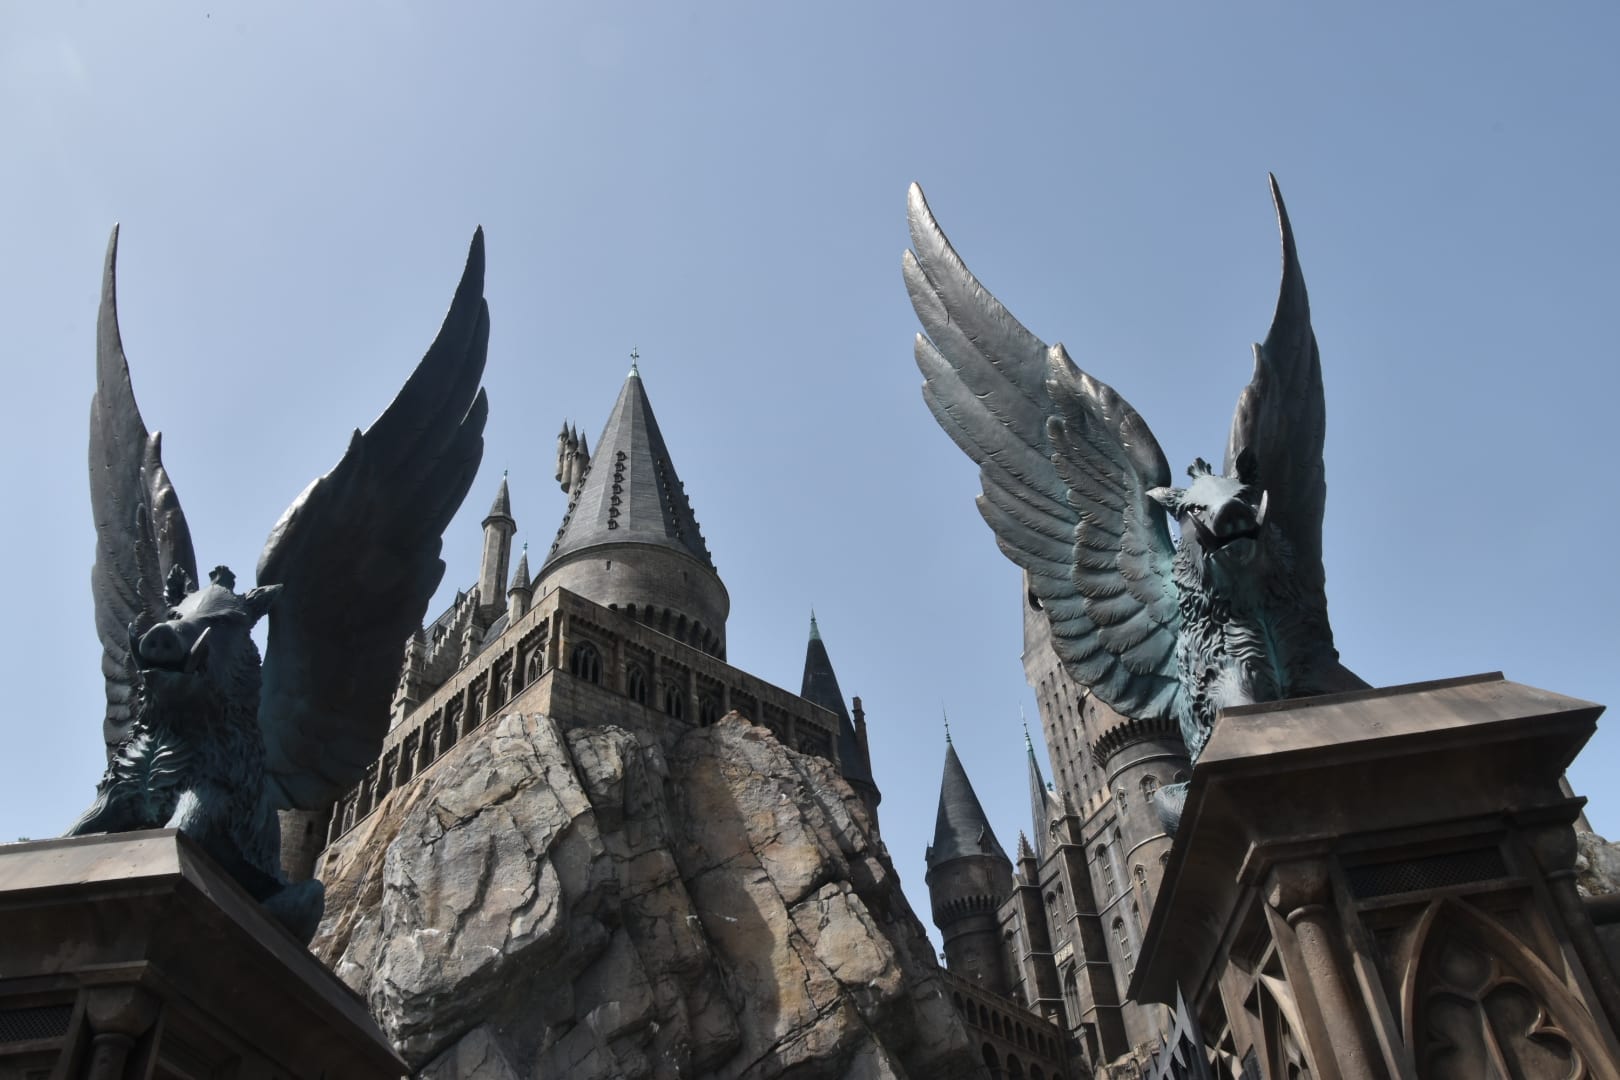 Plan a Harry Potter World trip